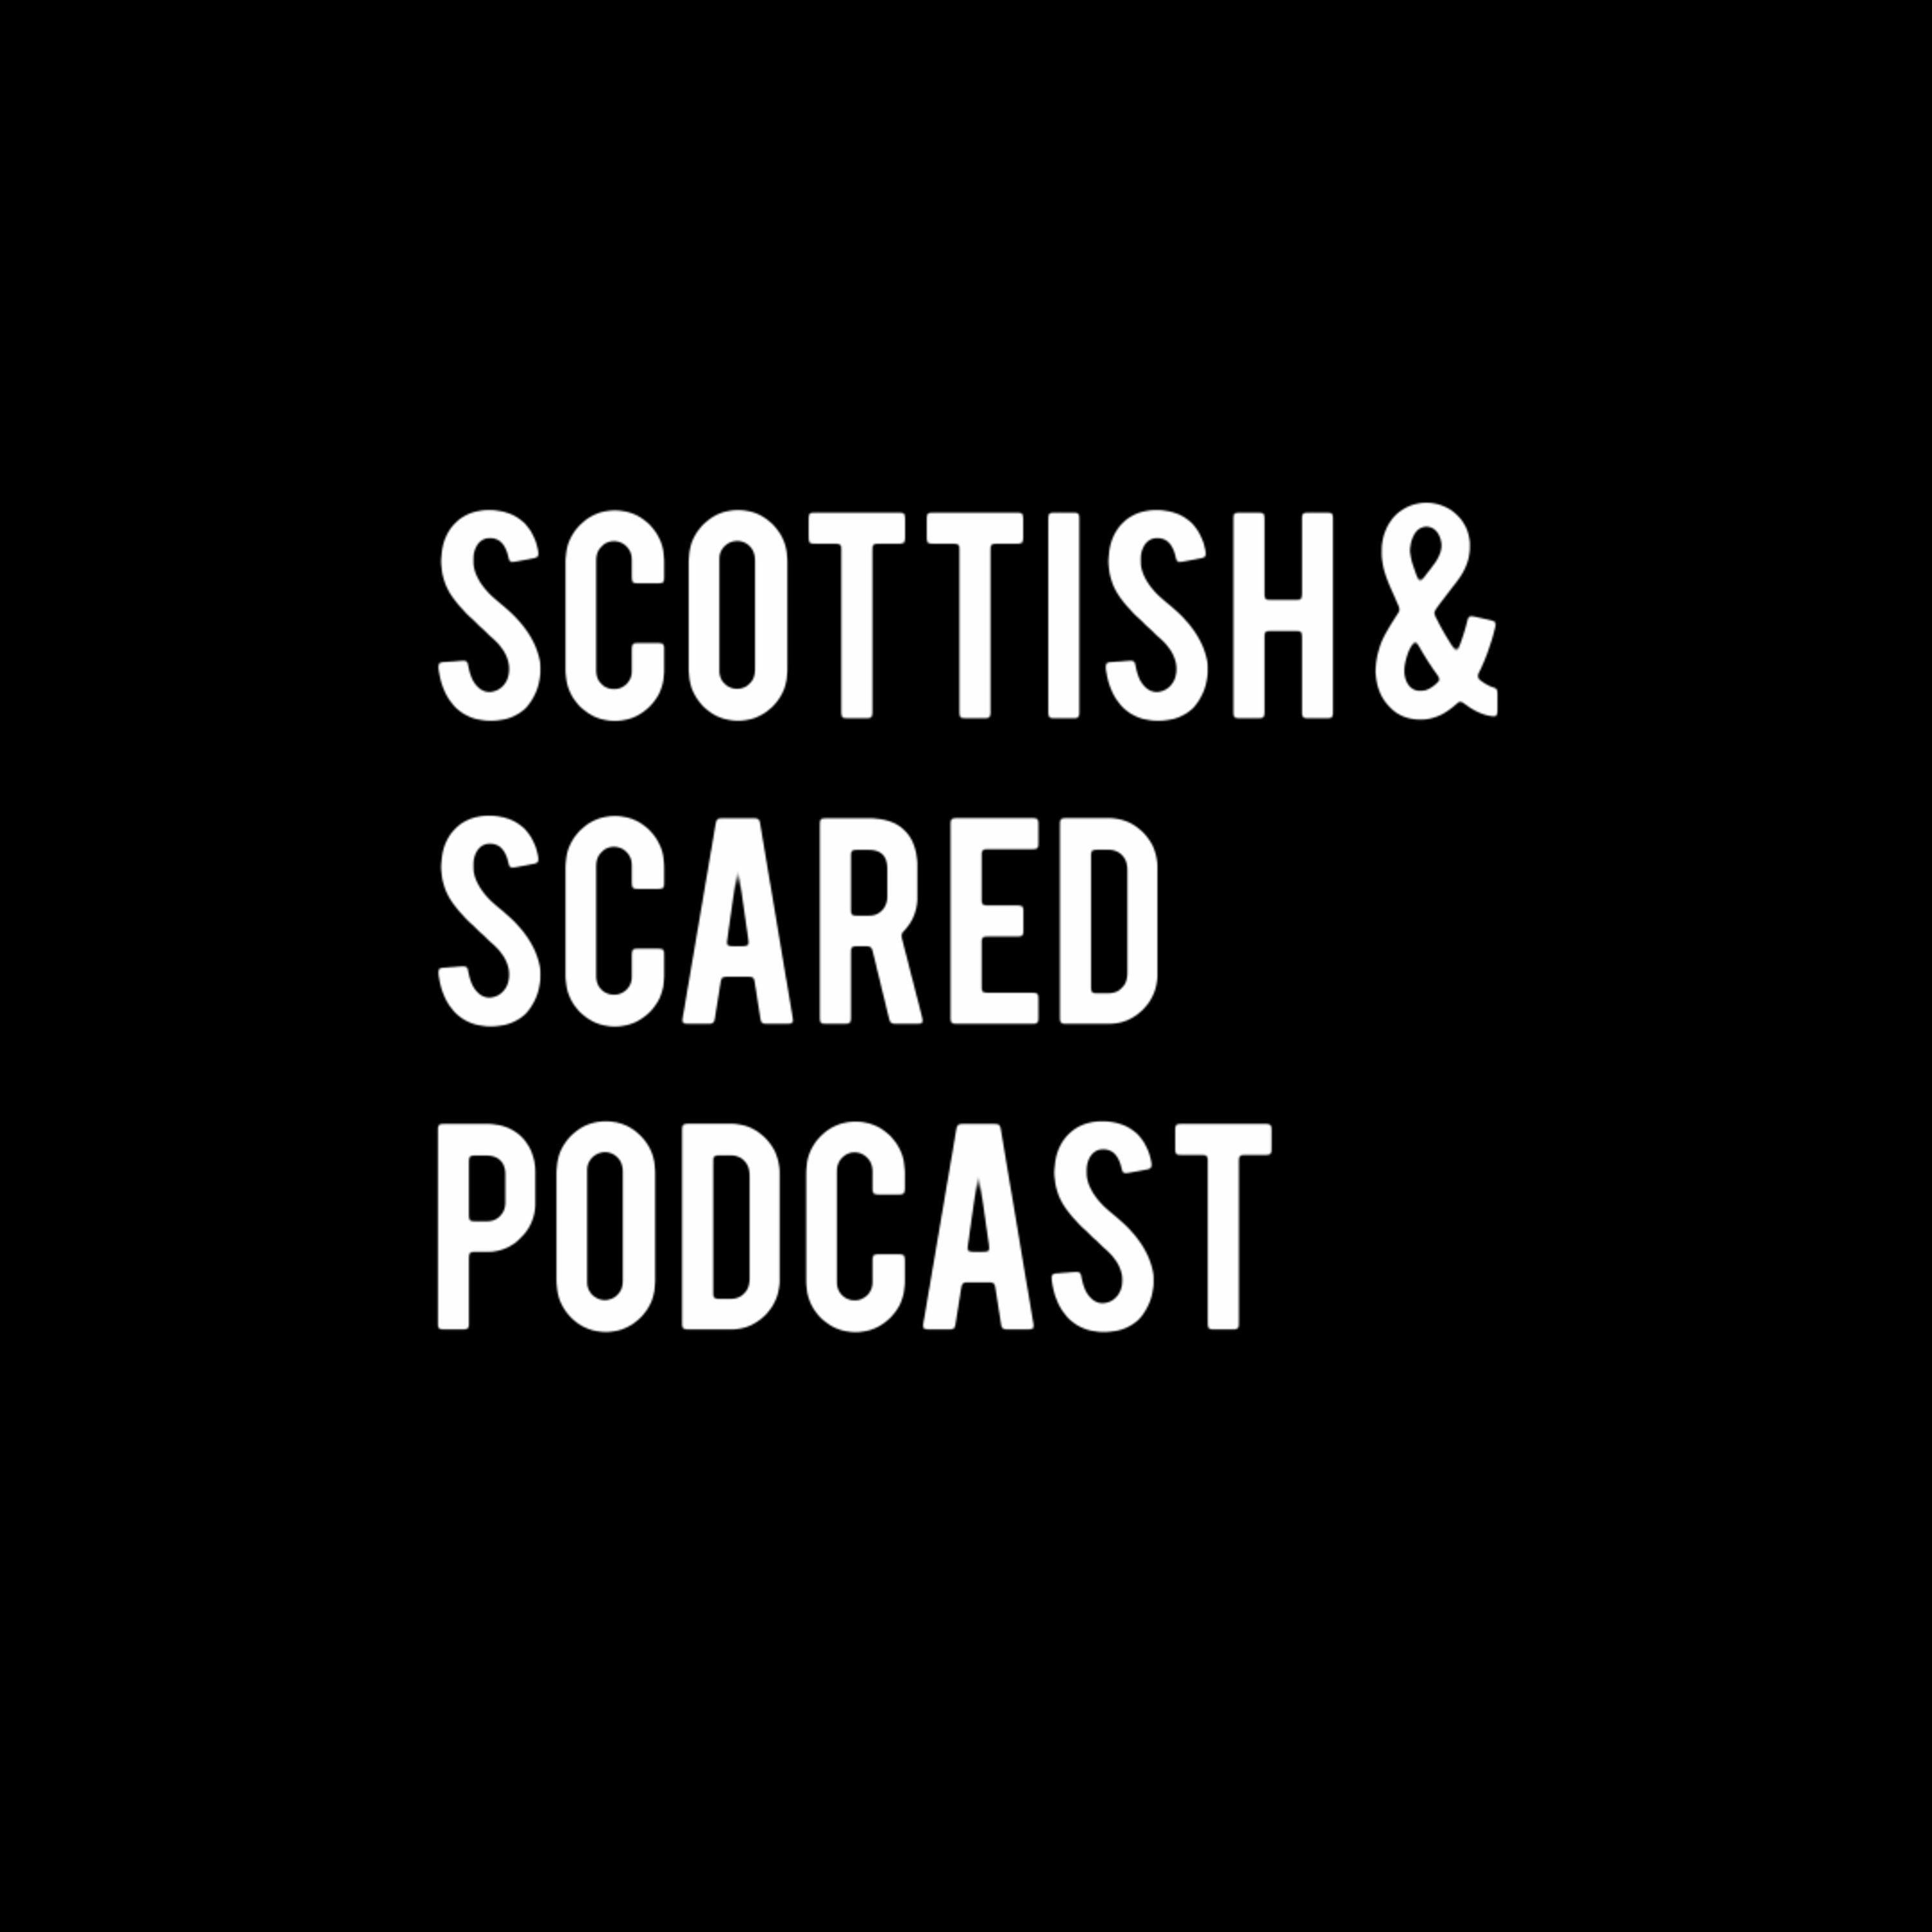 Listener Stories From Stirling Castle